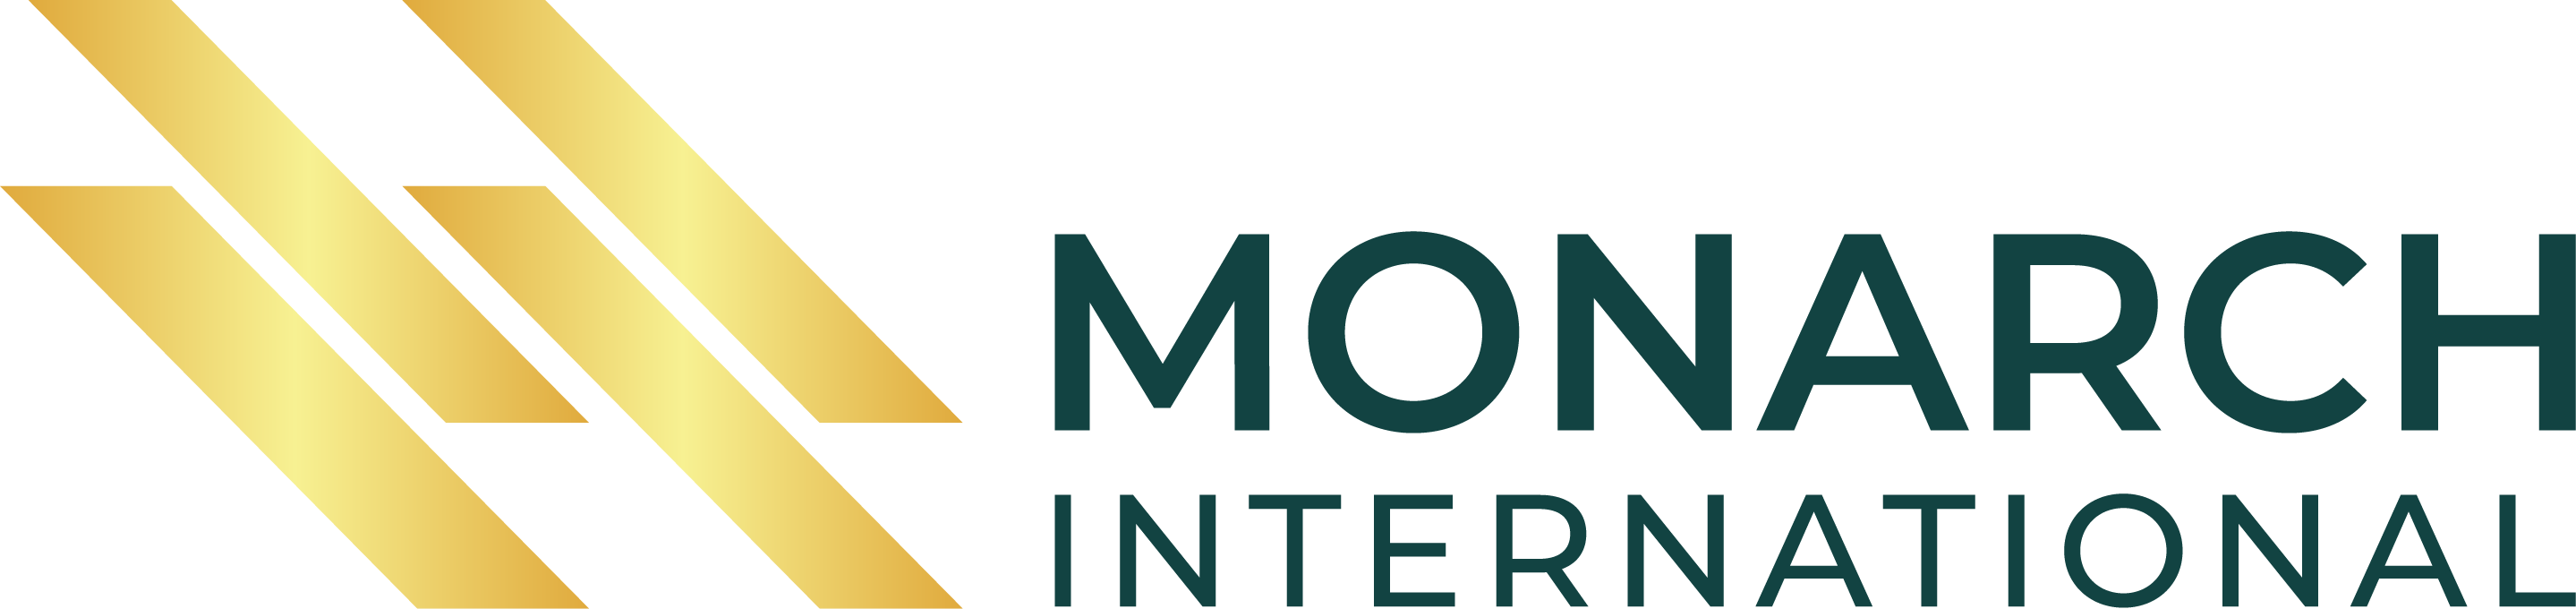 Monarch International Estate Developers Private Limited